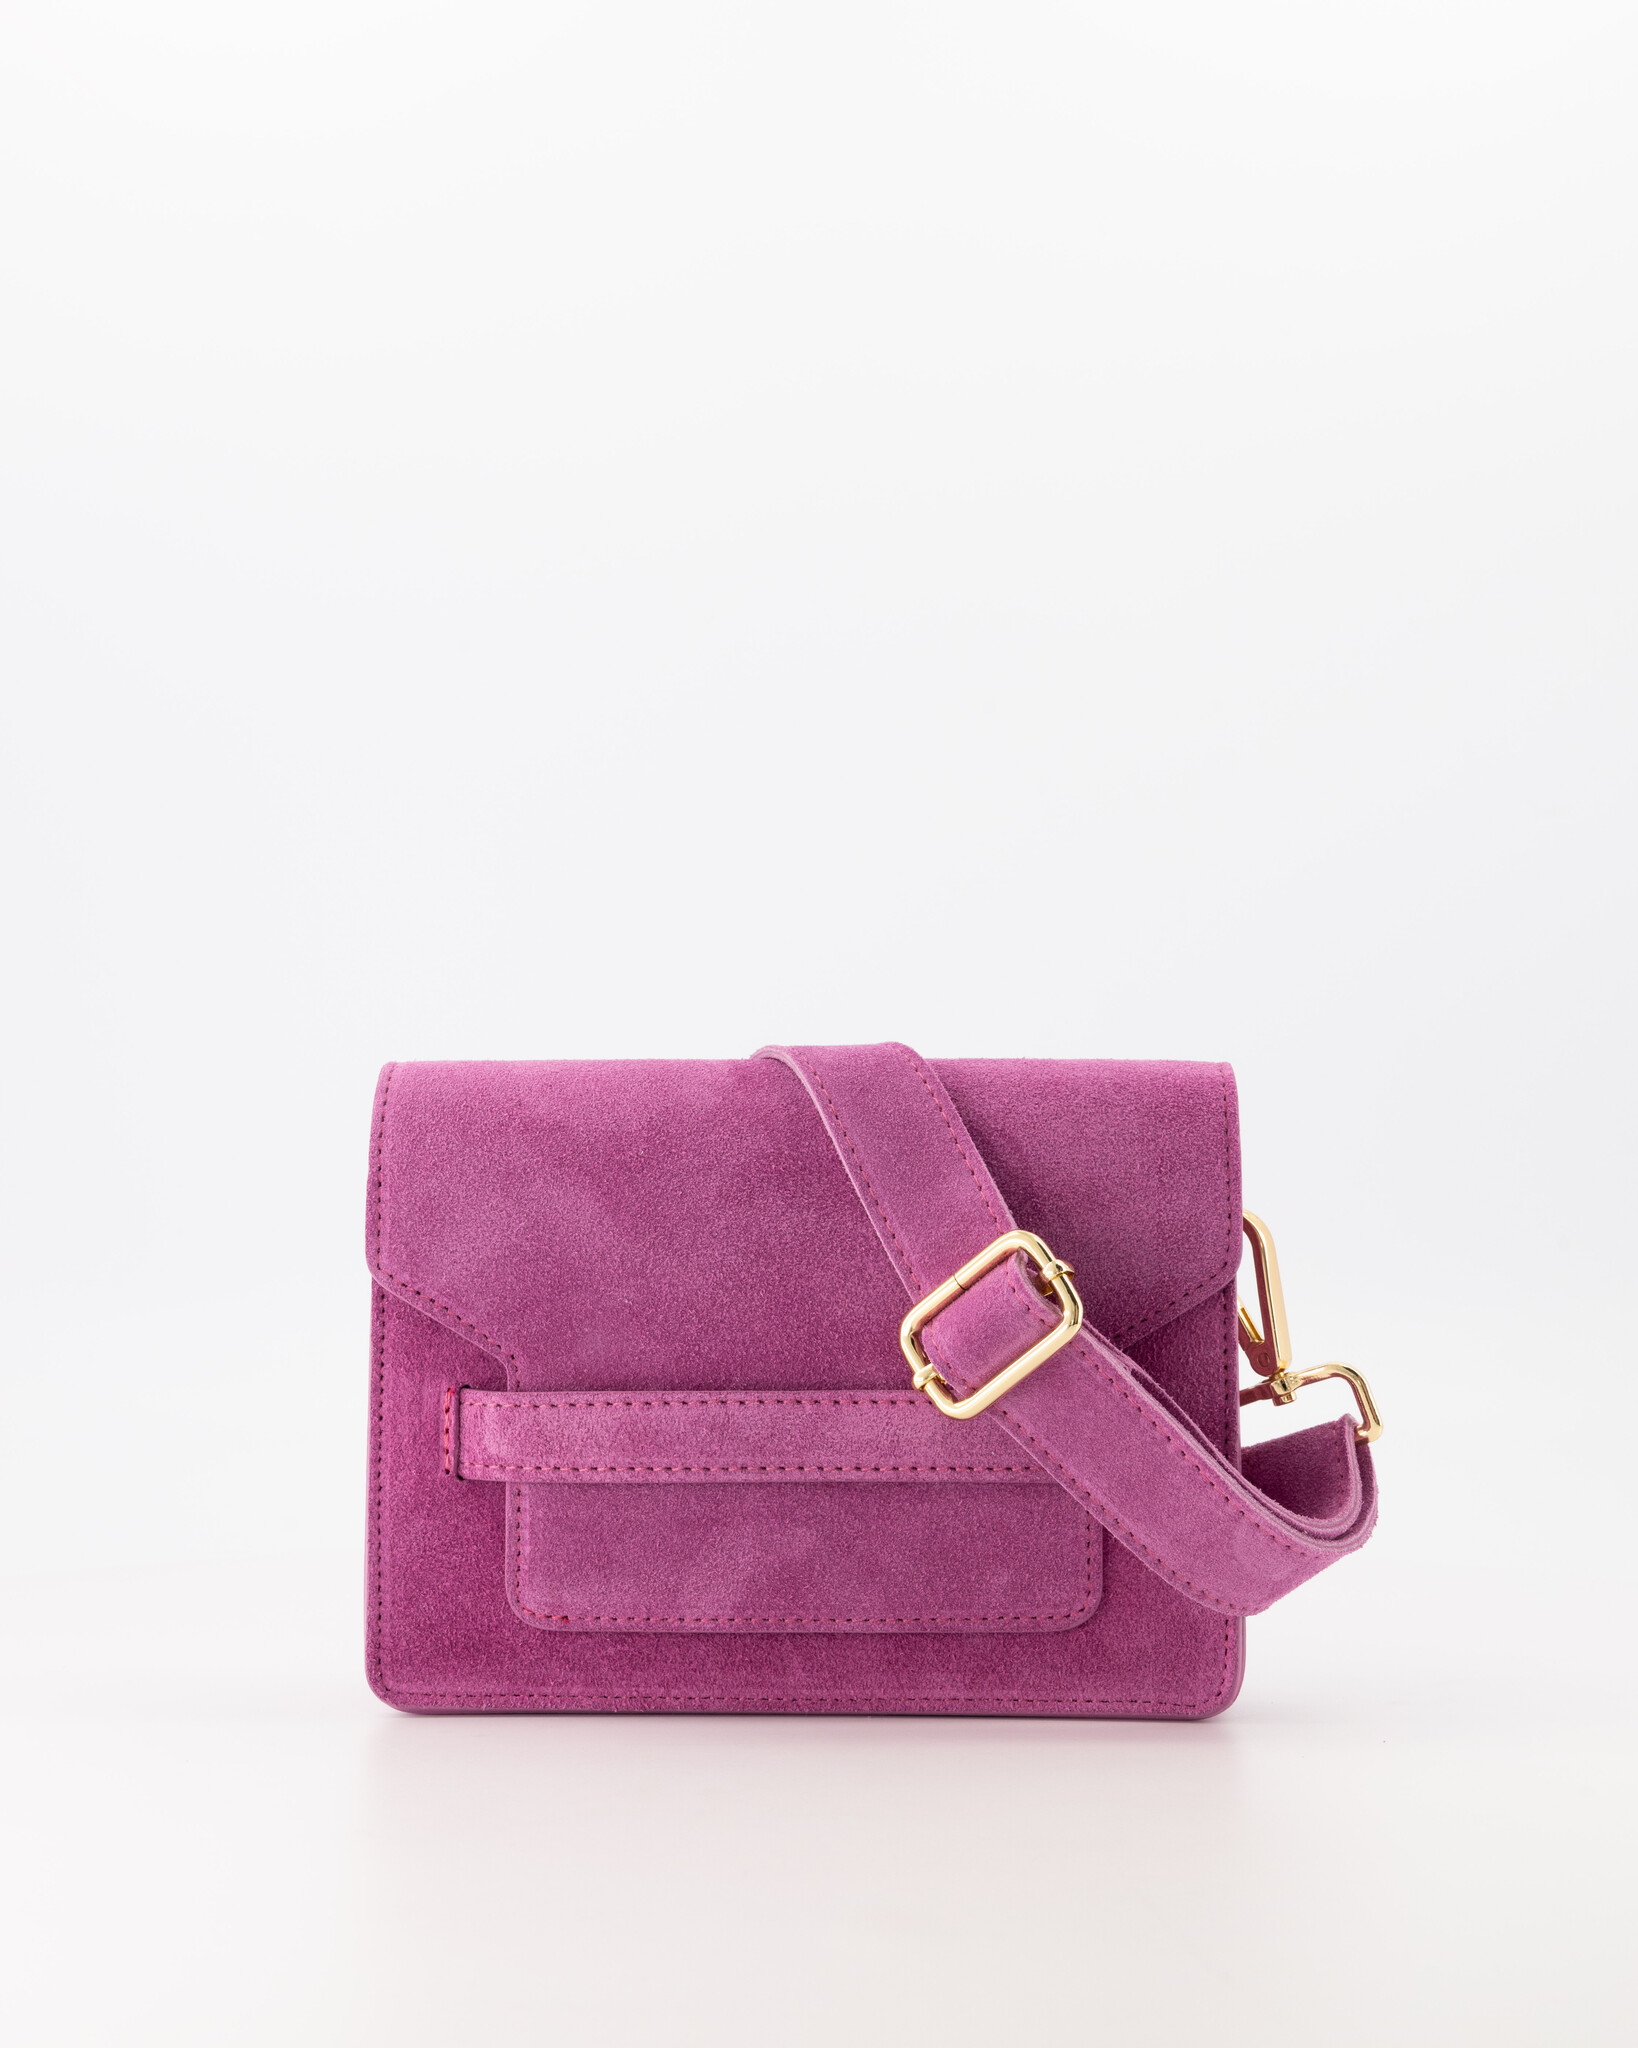 ladies pink suede envelope clutch bag| Alibaba.com